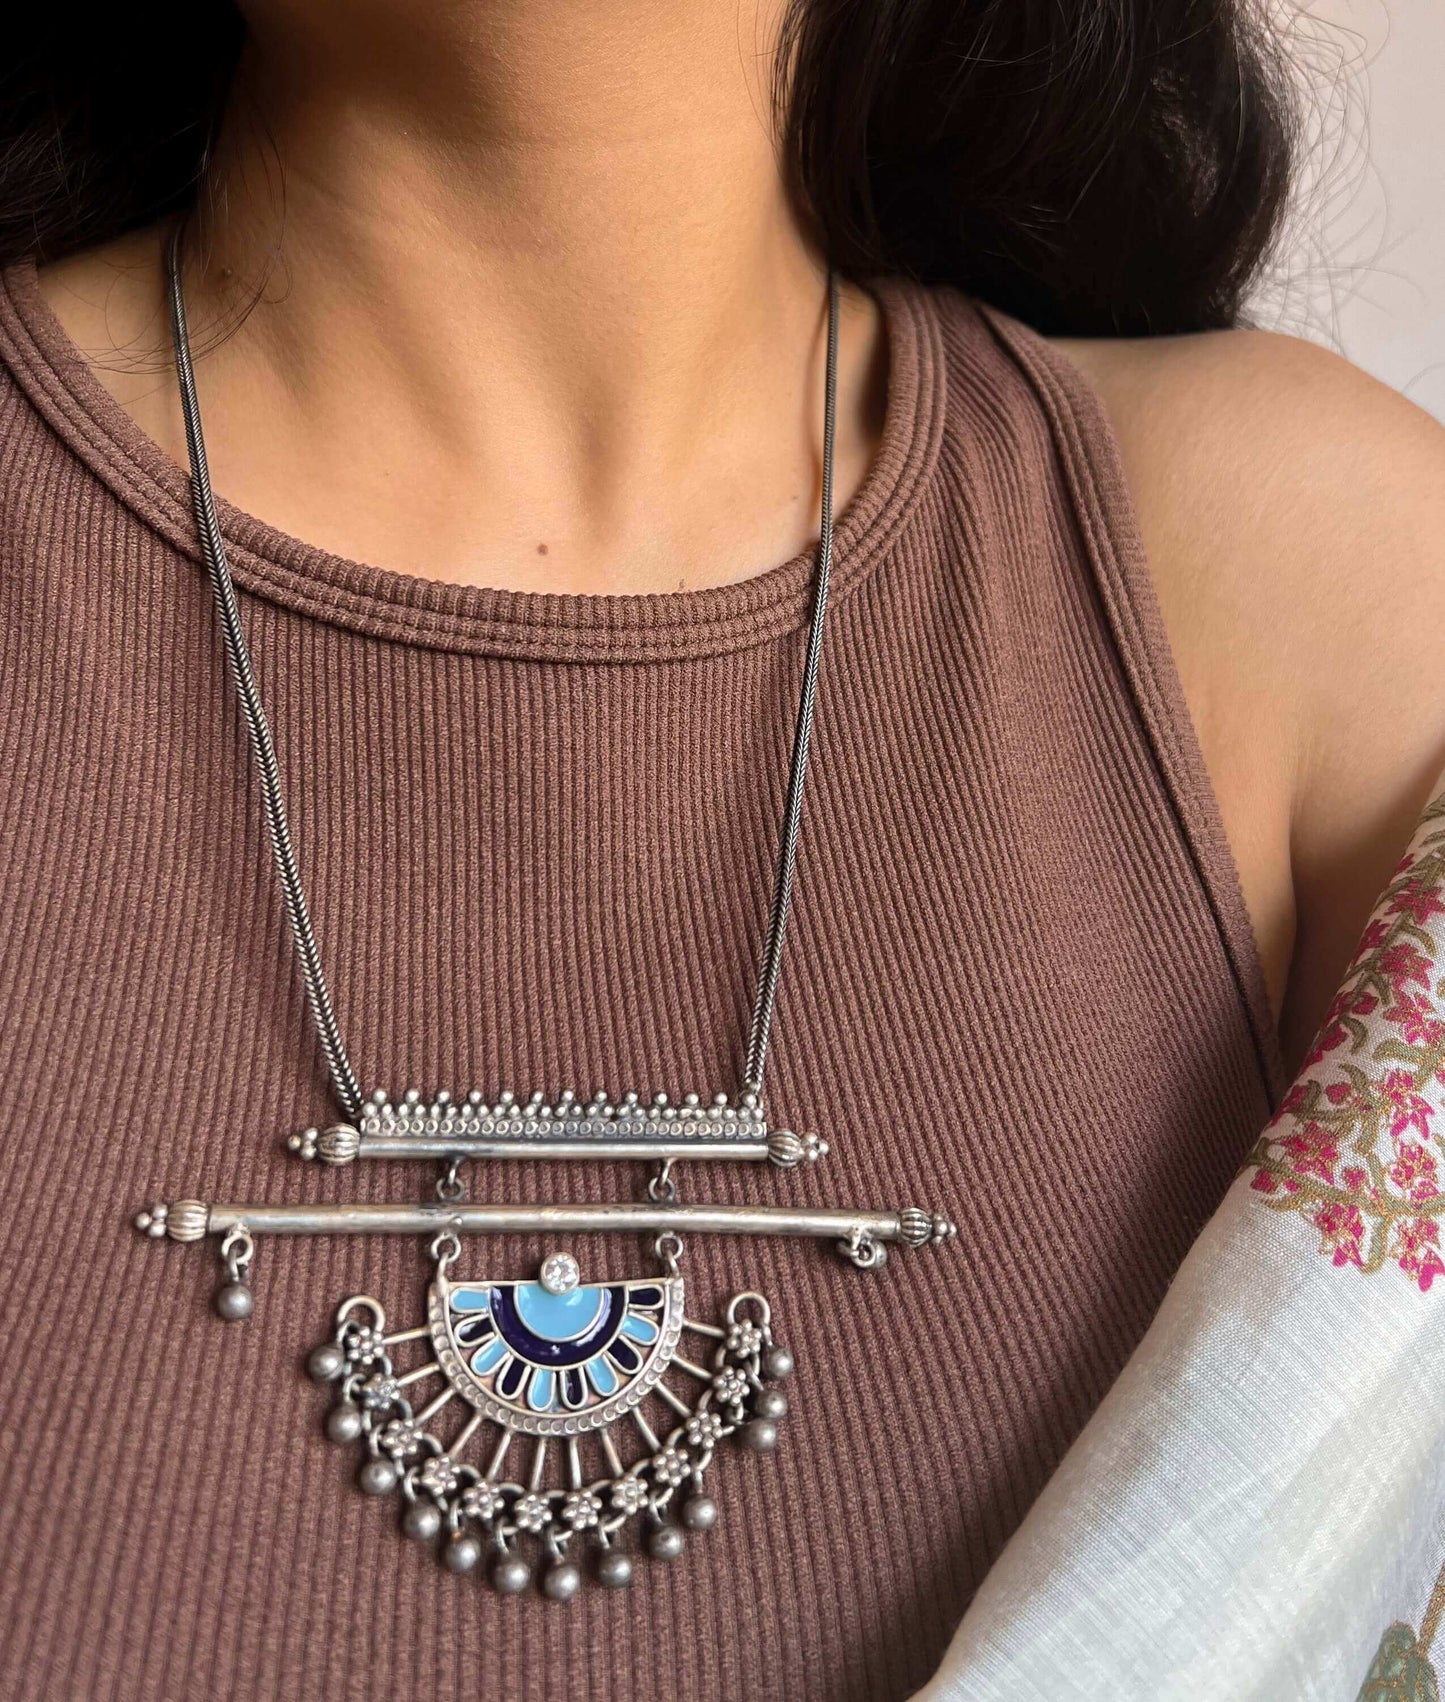 Adhyavi long silver necklace with enamel pendant